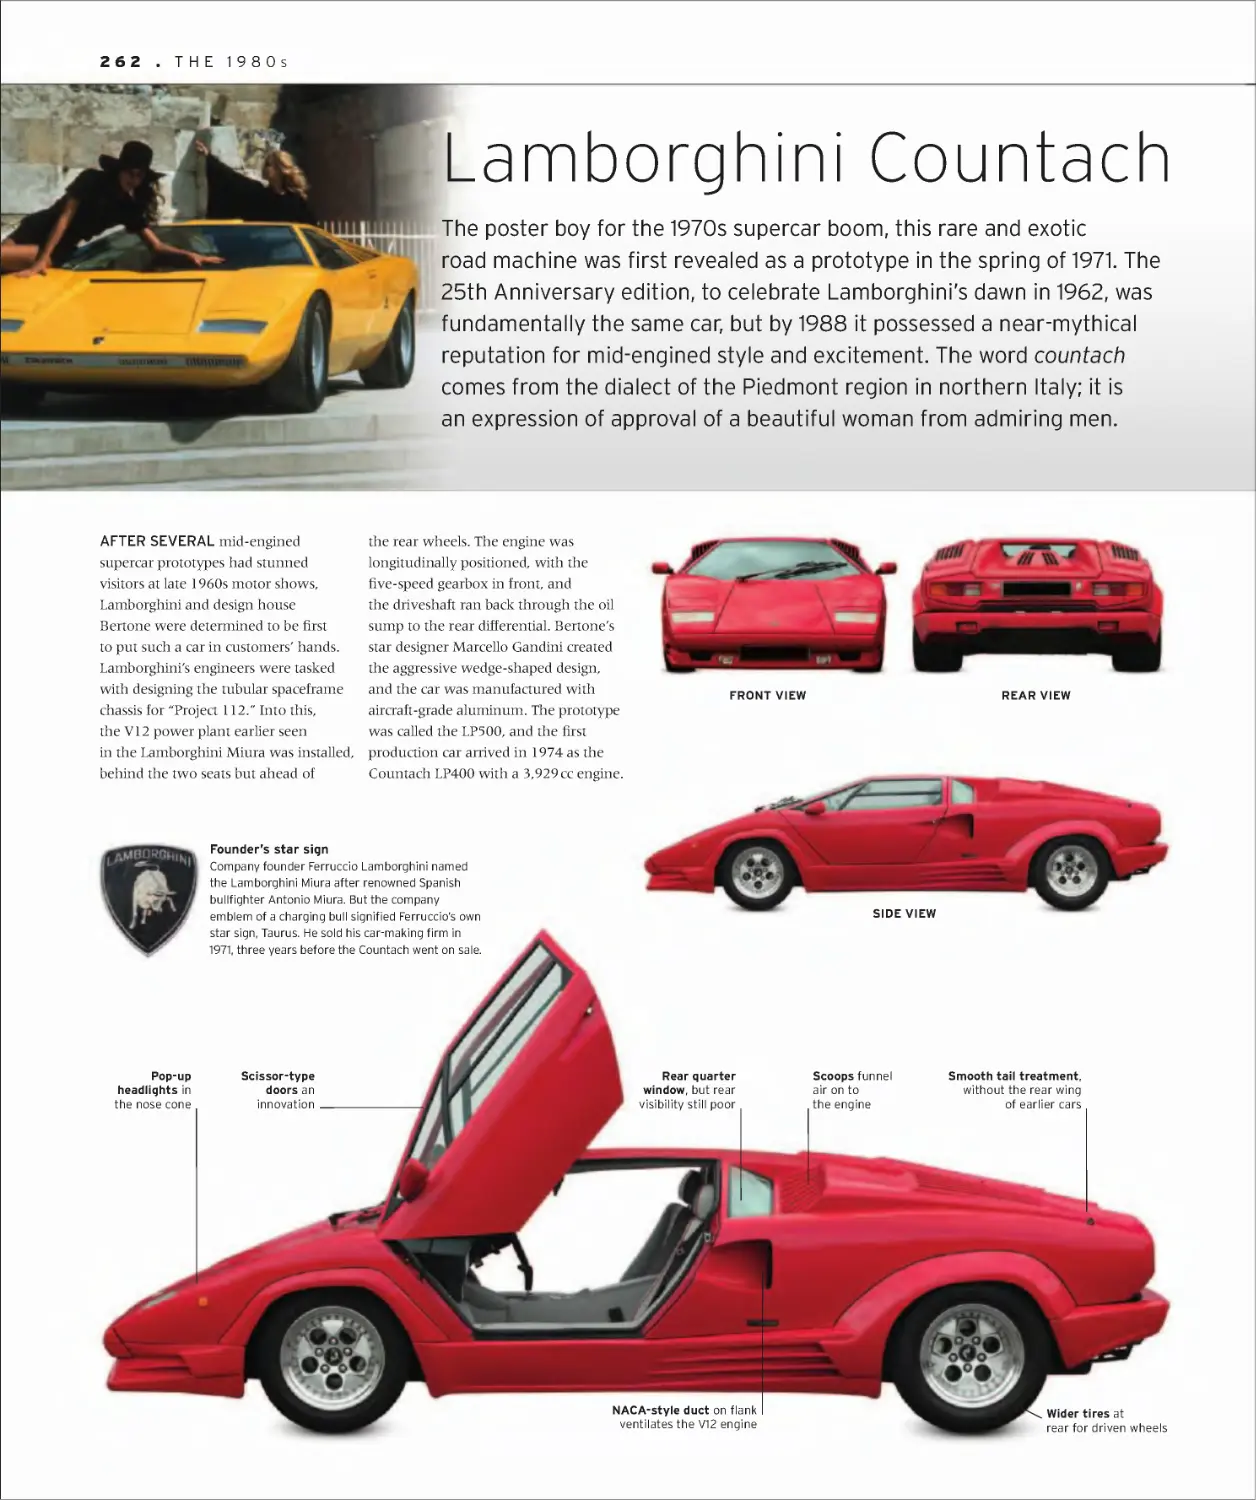 Lamborghini Countach 262